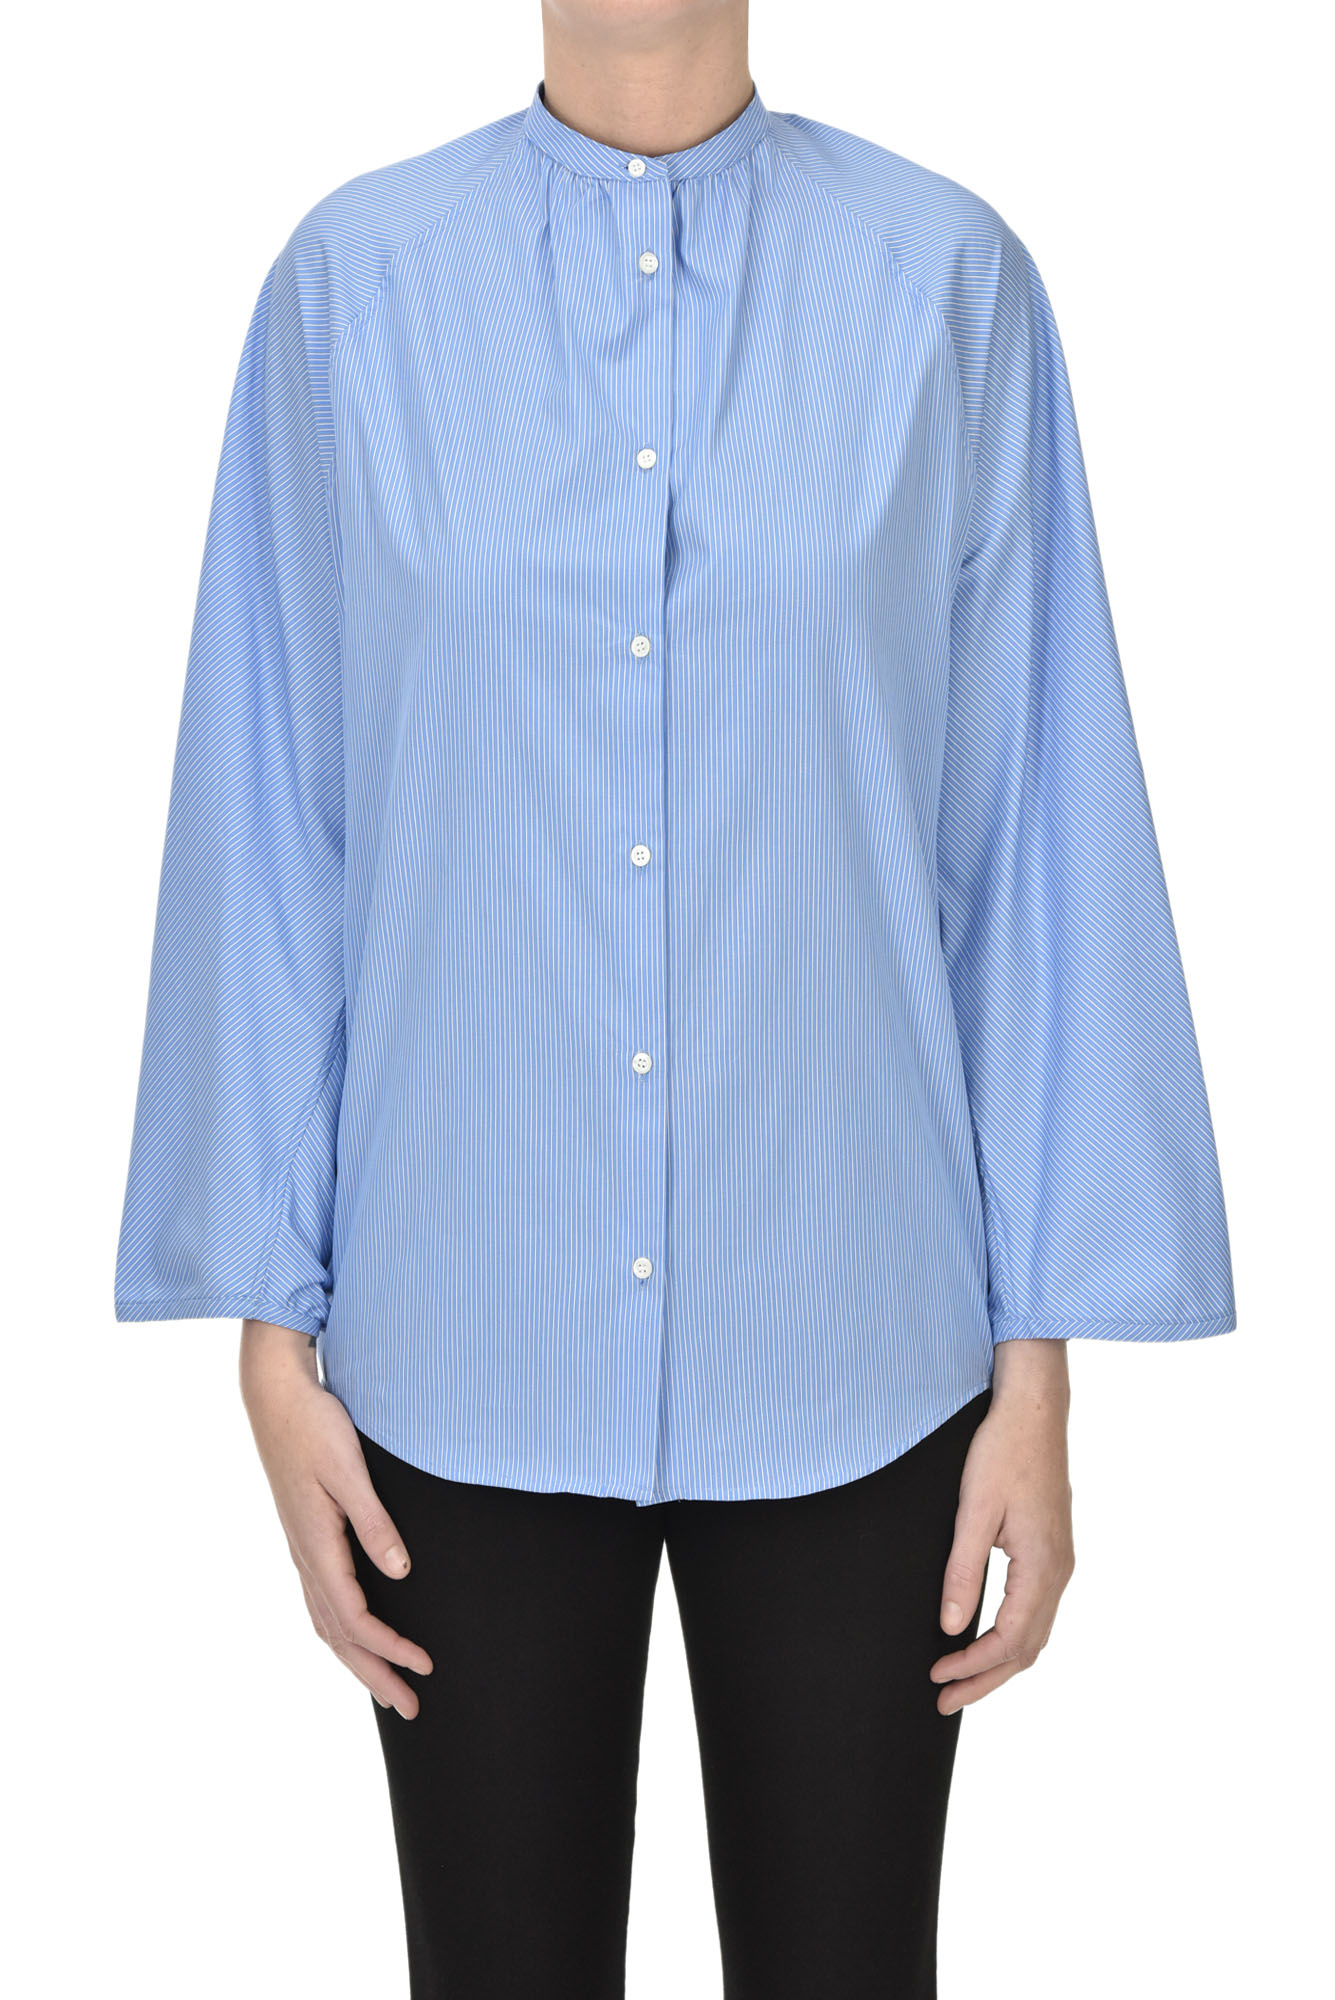 Aspesi Striped Cotton Shirt In Blue